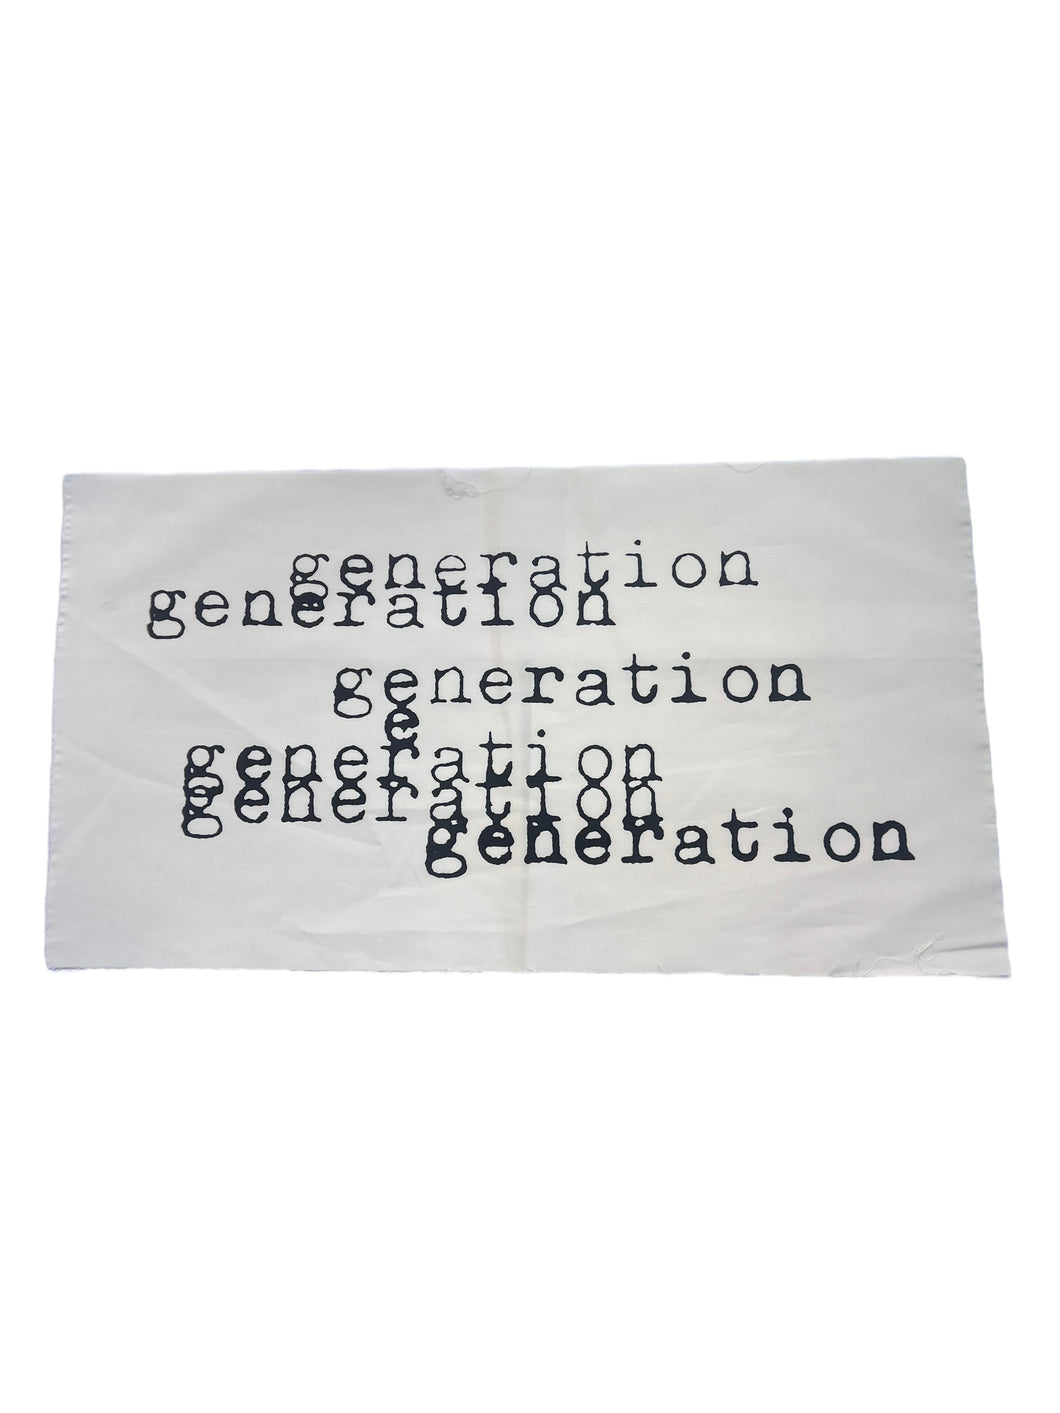 SS97 Teenage Summer Camp Cloth Banner